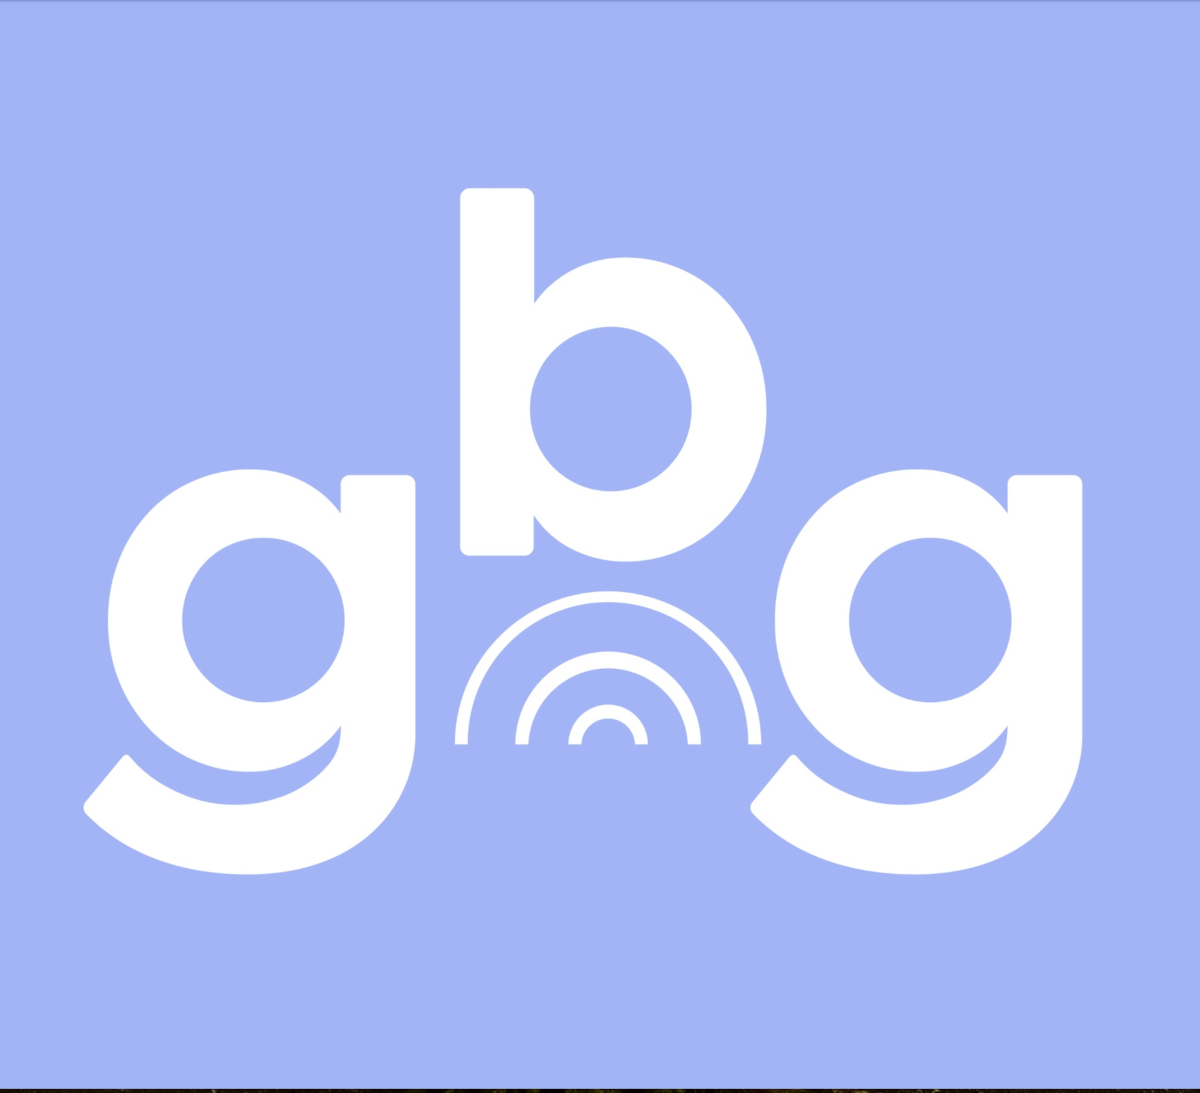 goodbuy gear social logo with purple background